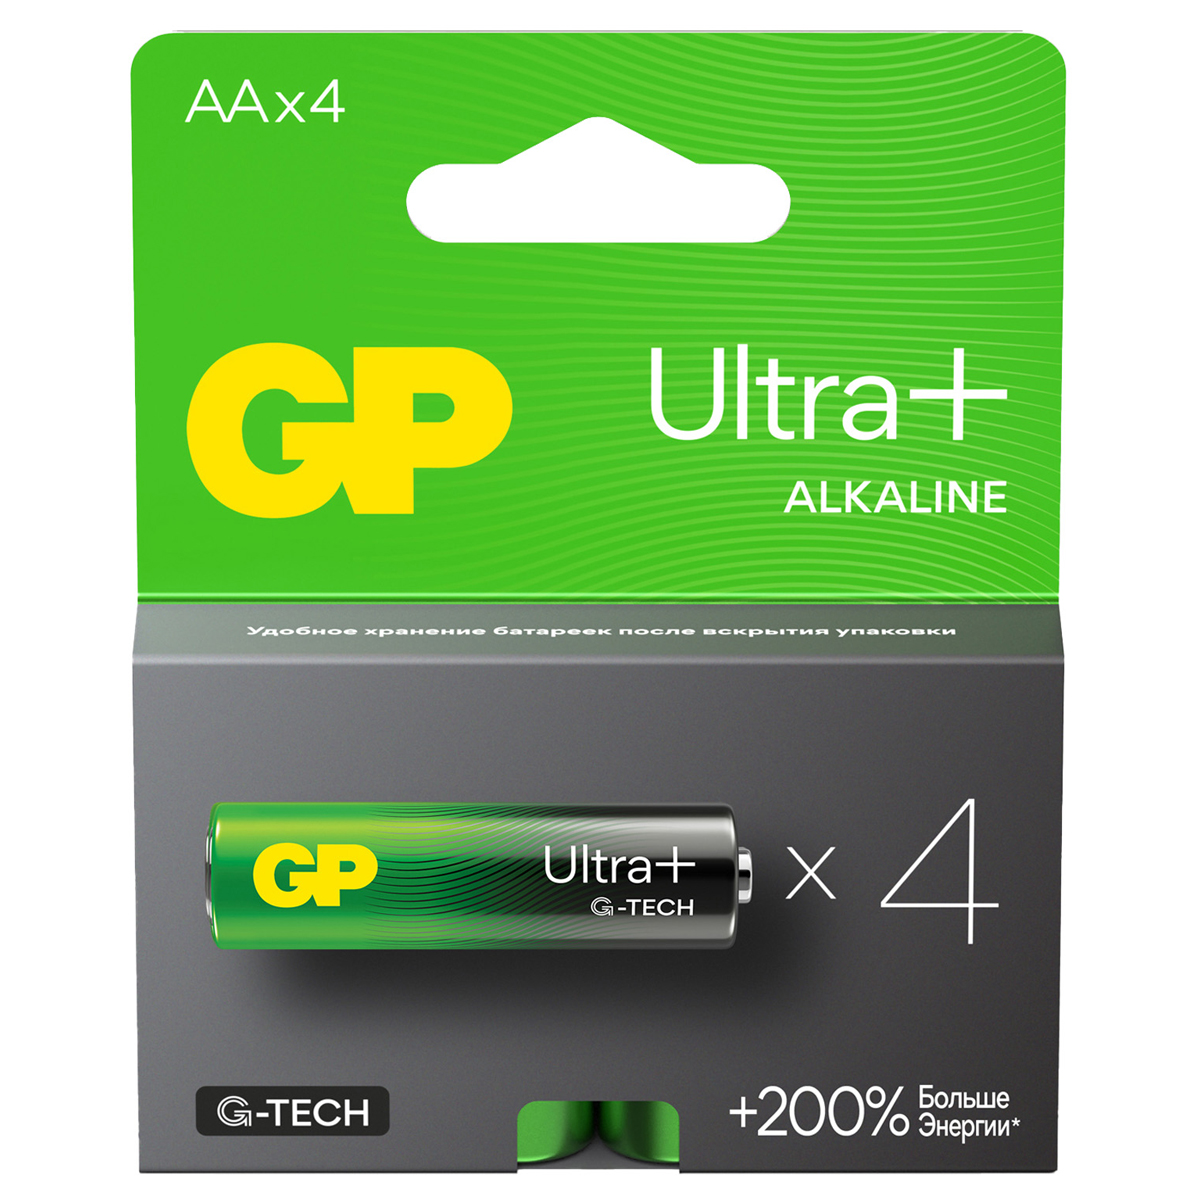 Батарейка GP Ultra Plus G-Tech AA (LR6) 15AUP алкалиновая, BC4